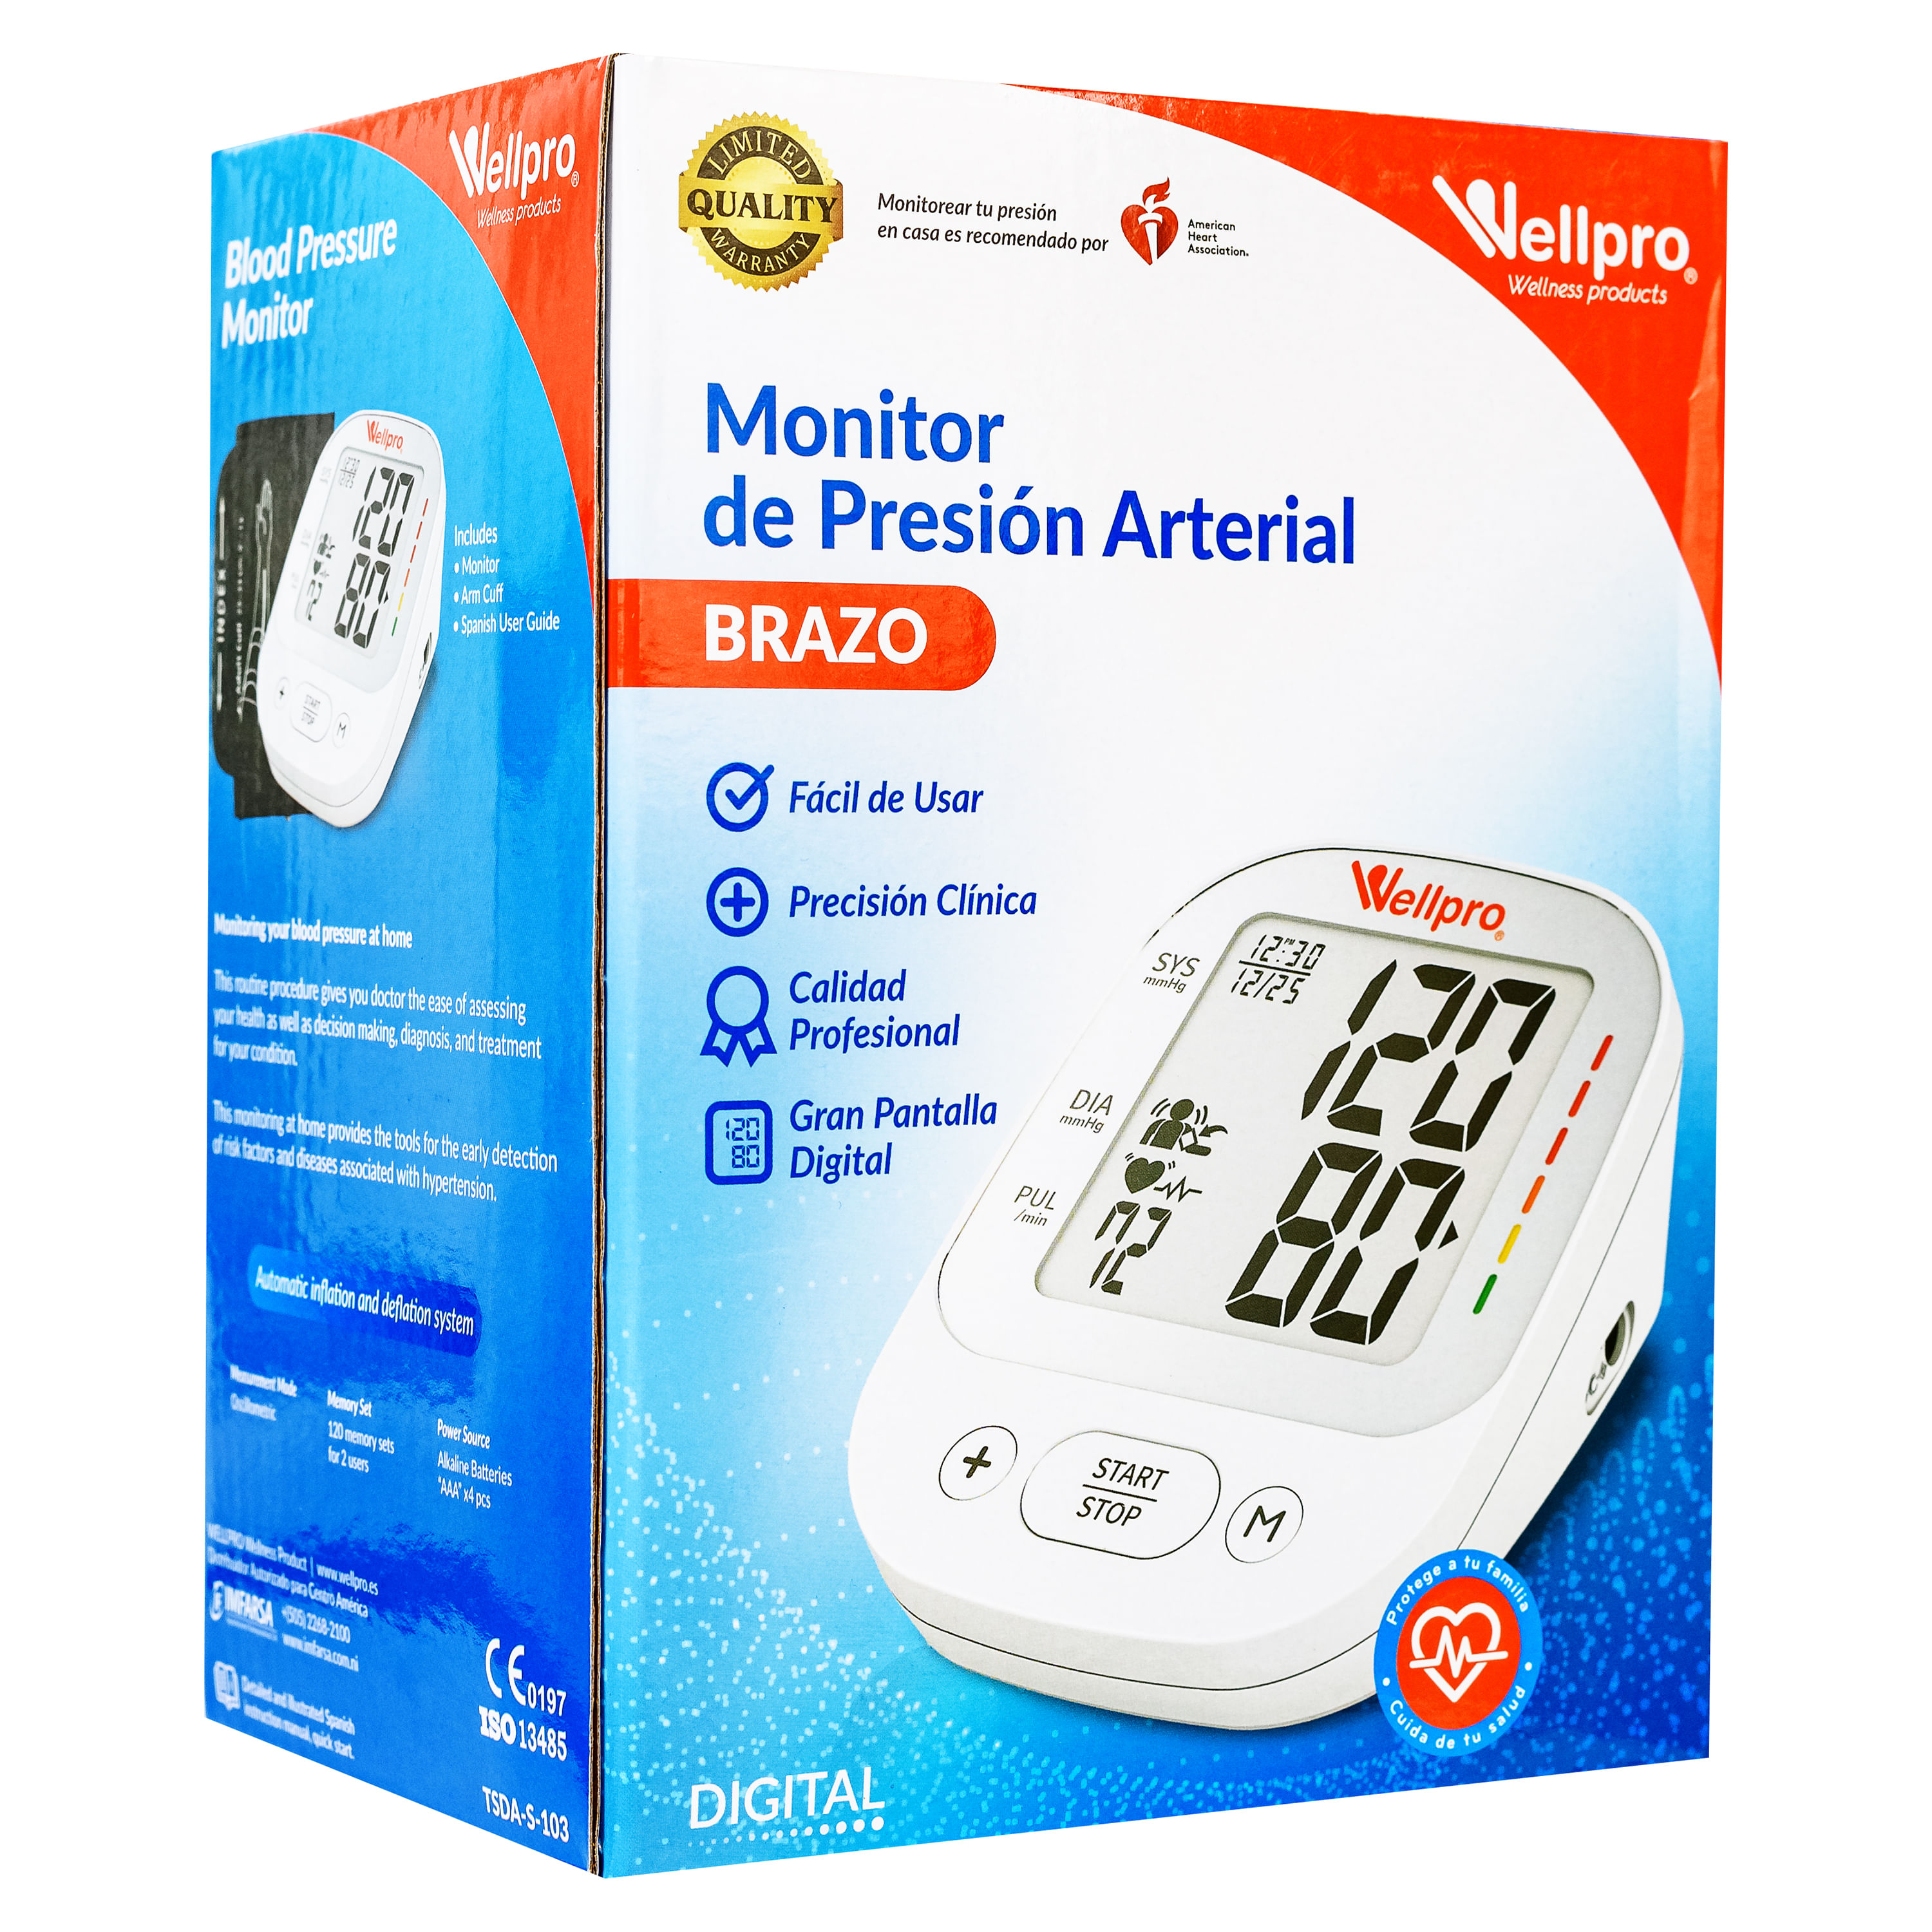 Comprar Termometro Digital Wellpro Adulto